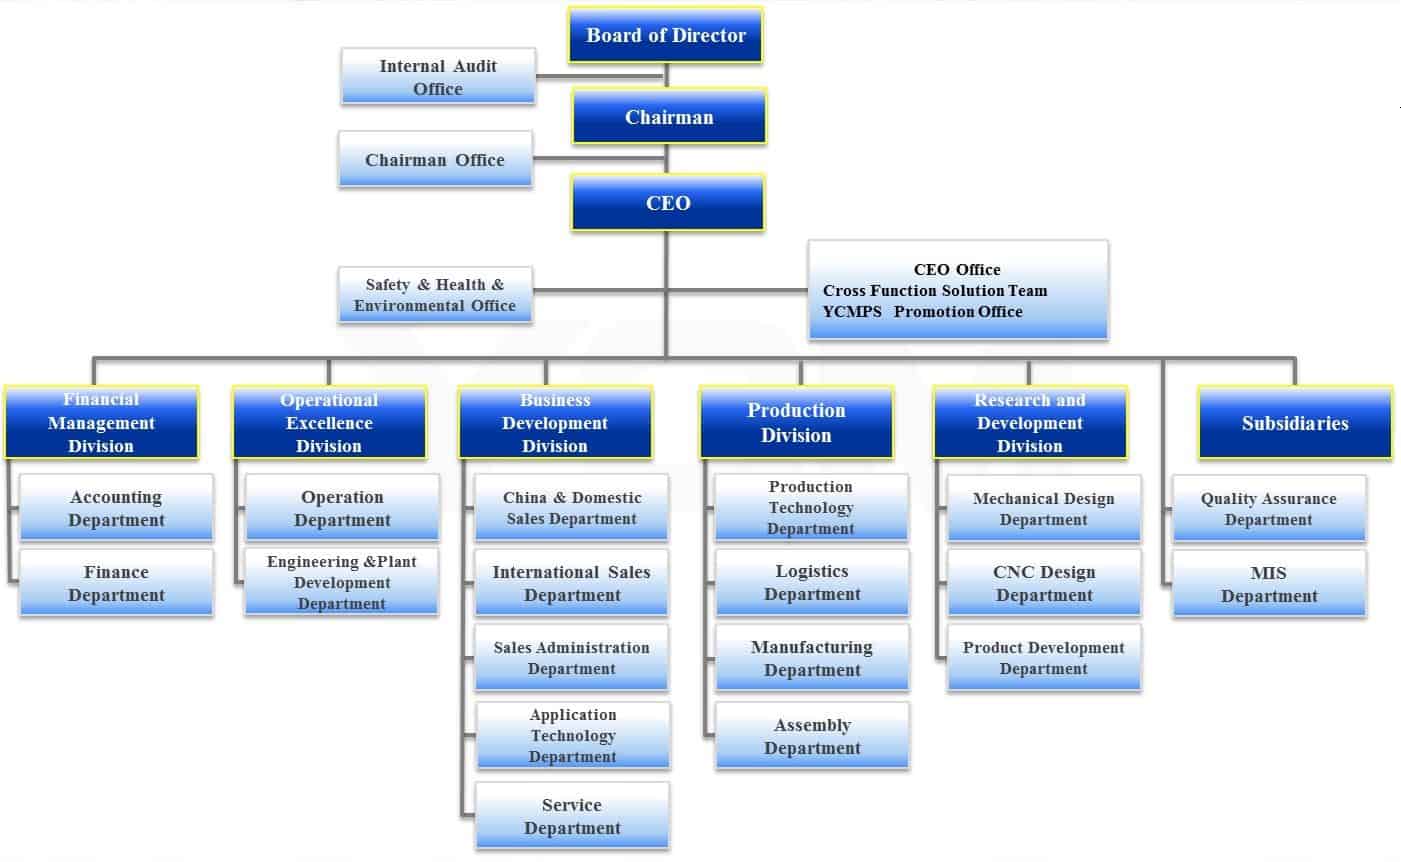 Microsoft Organization Chart Templates Excel